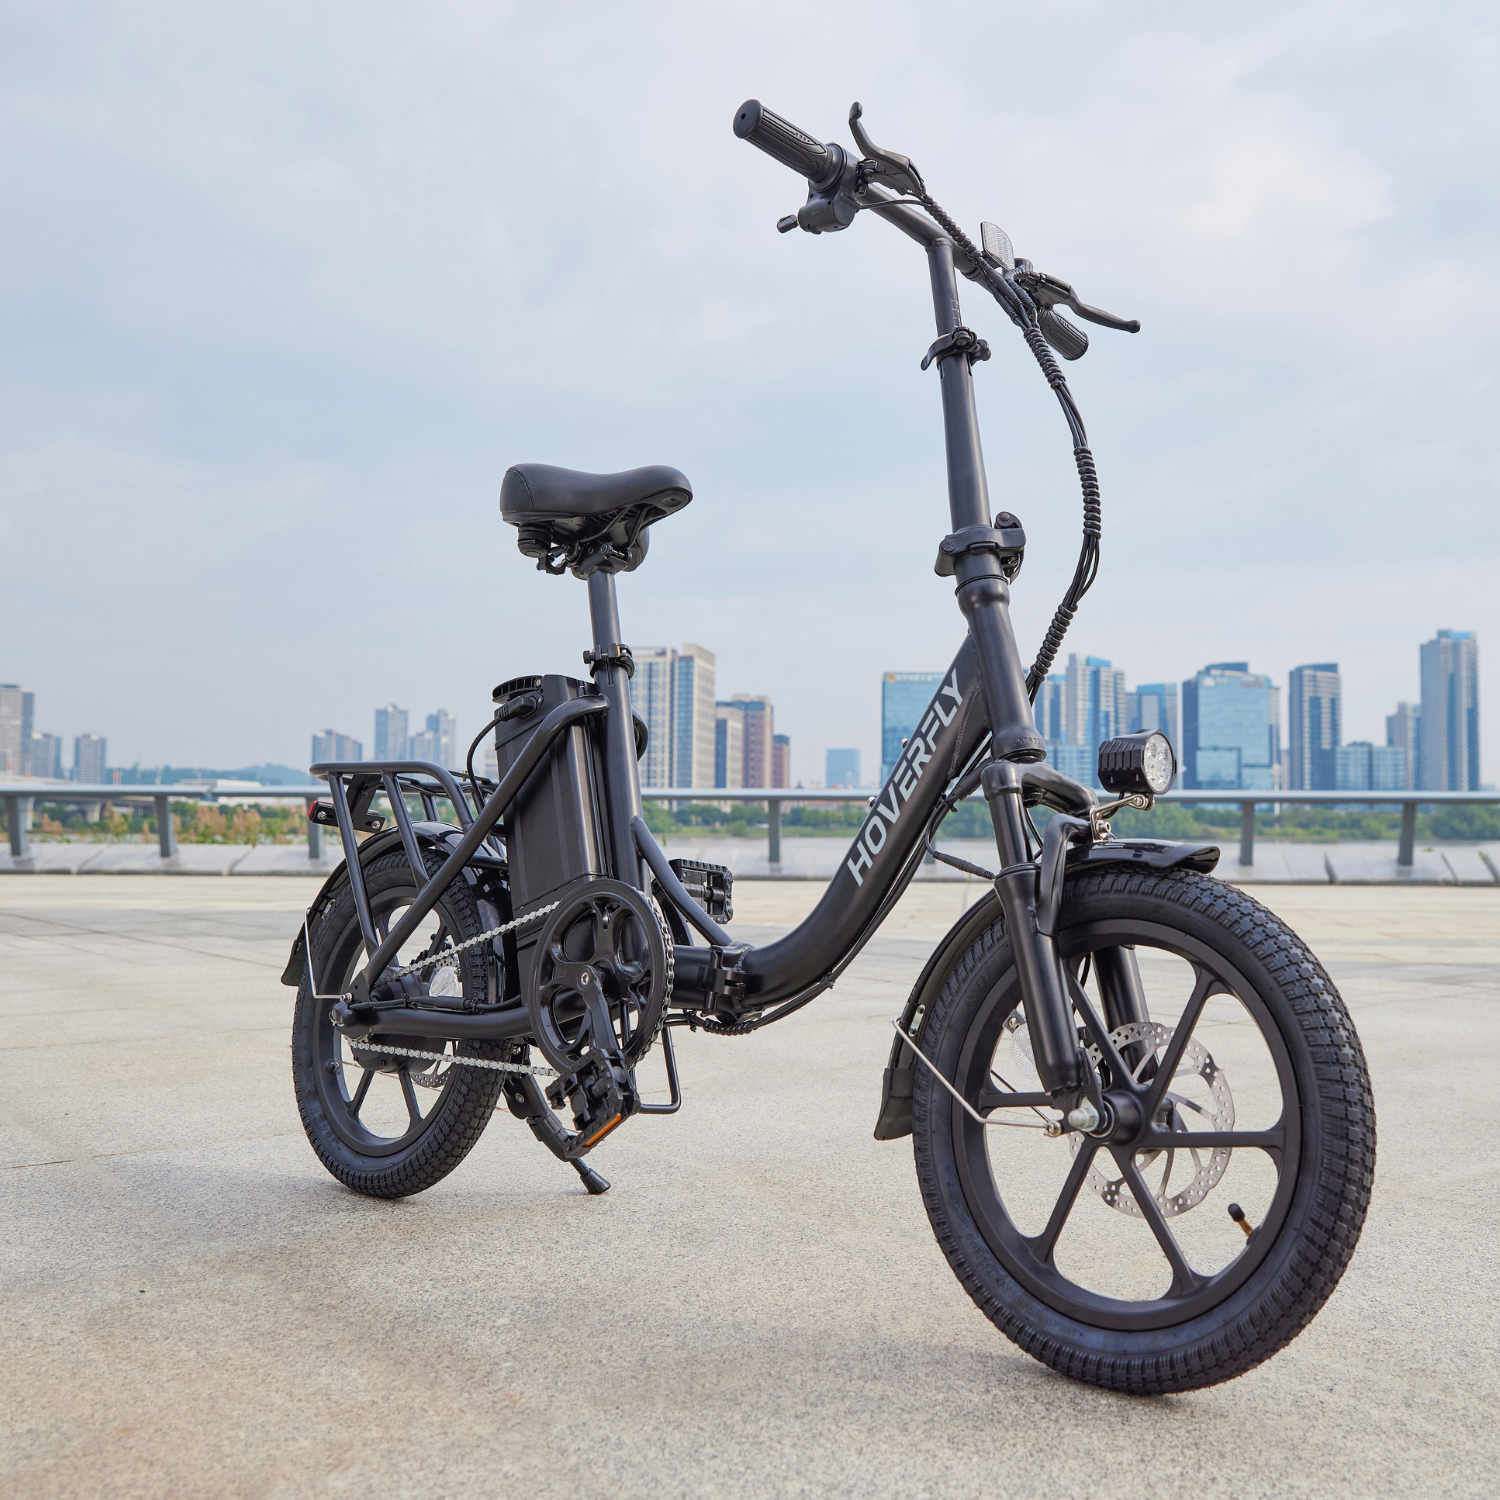 Black Hoverfly H3 Foldable E-Bike Parked Alongside Urban Roadway, Sleek & Ready for Next Adventure.